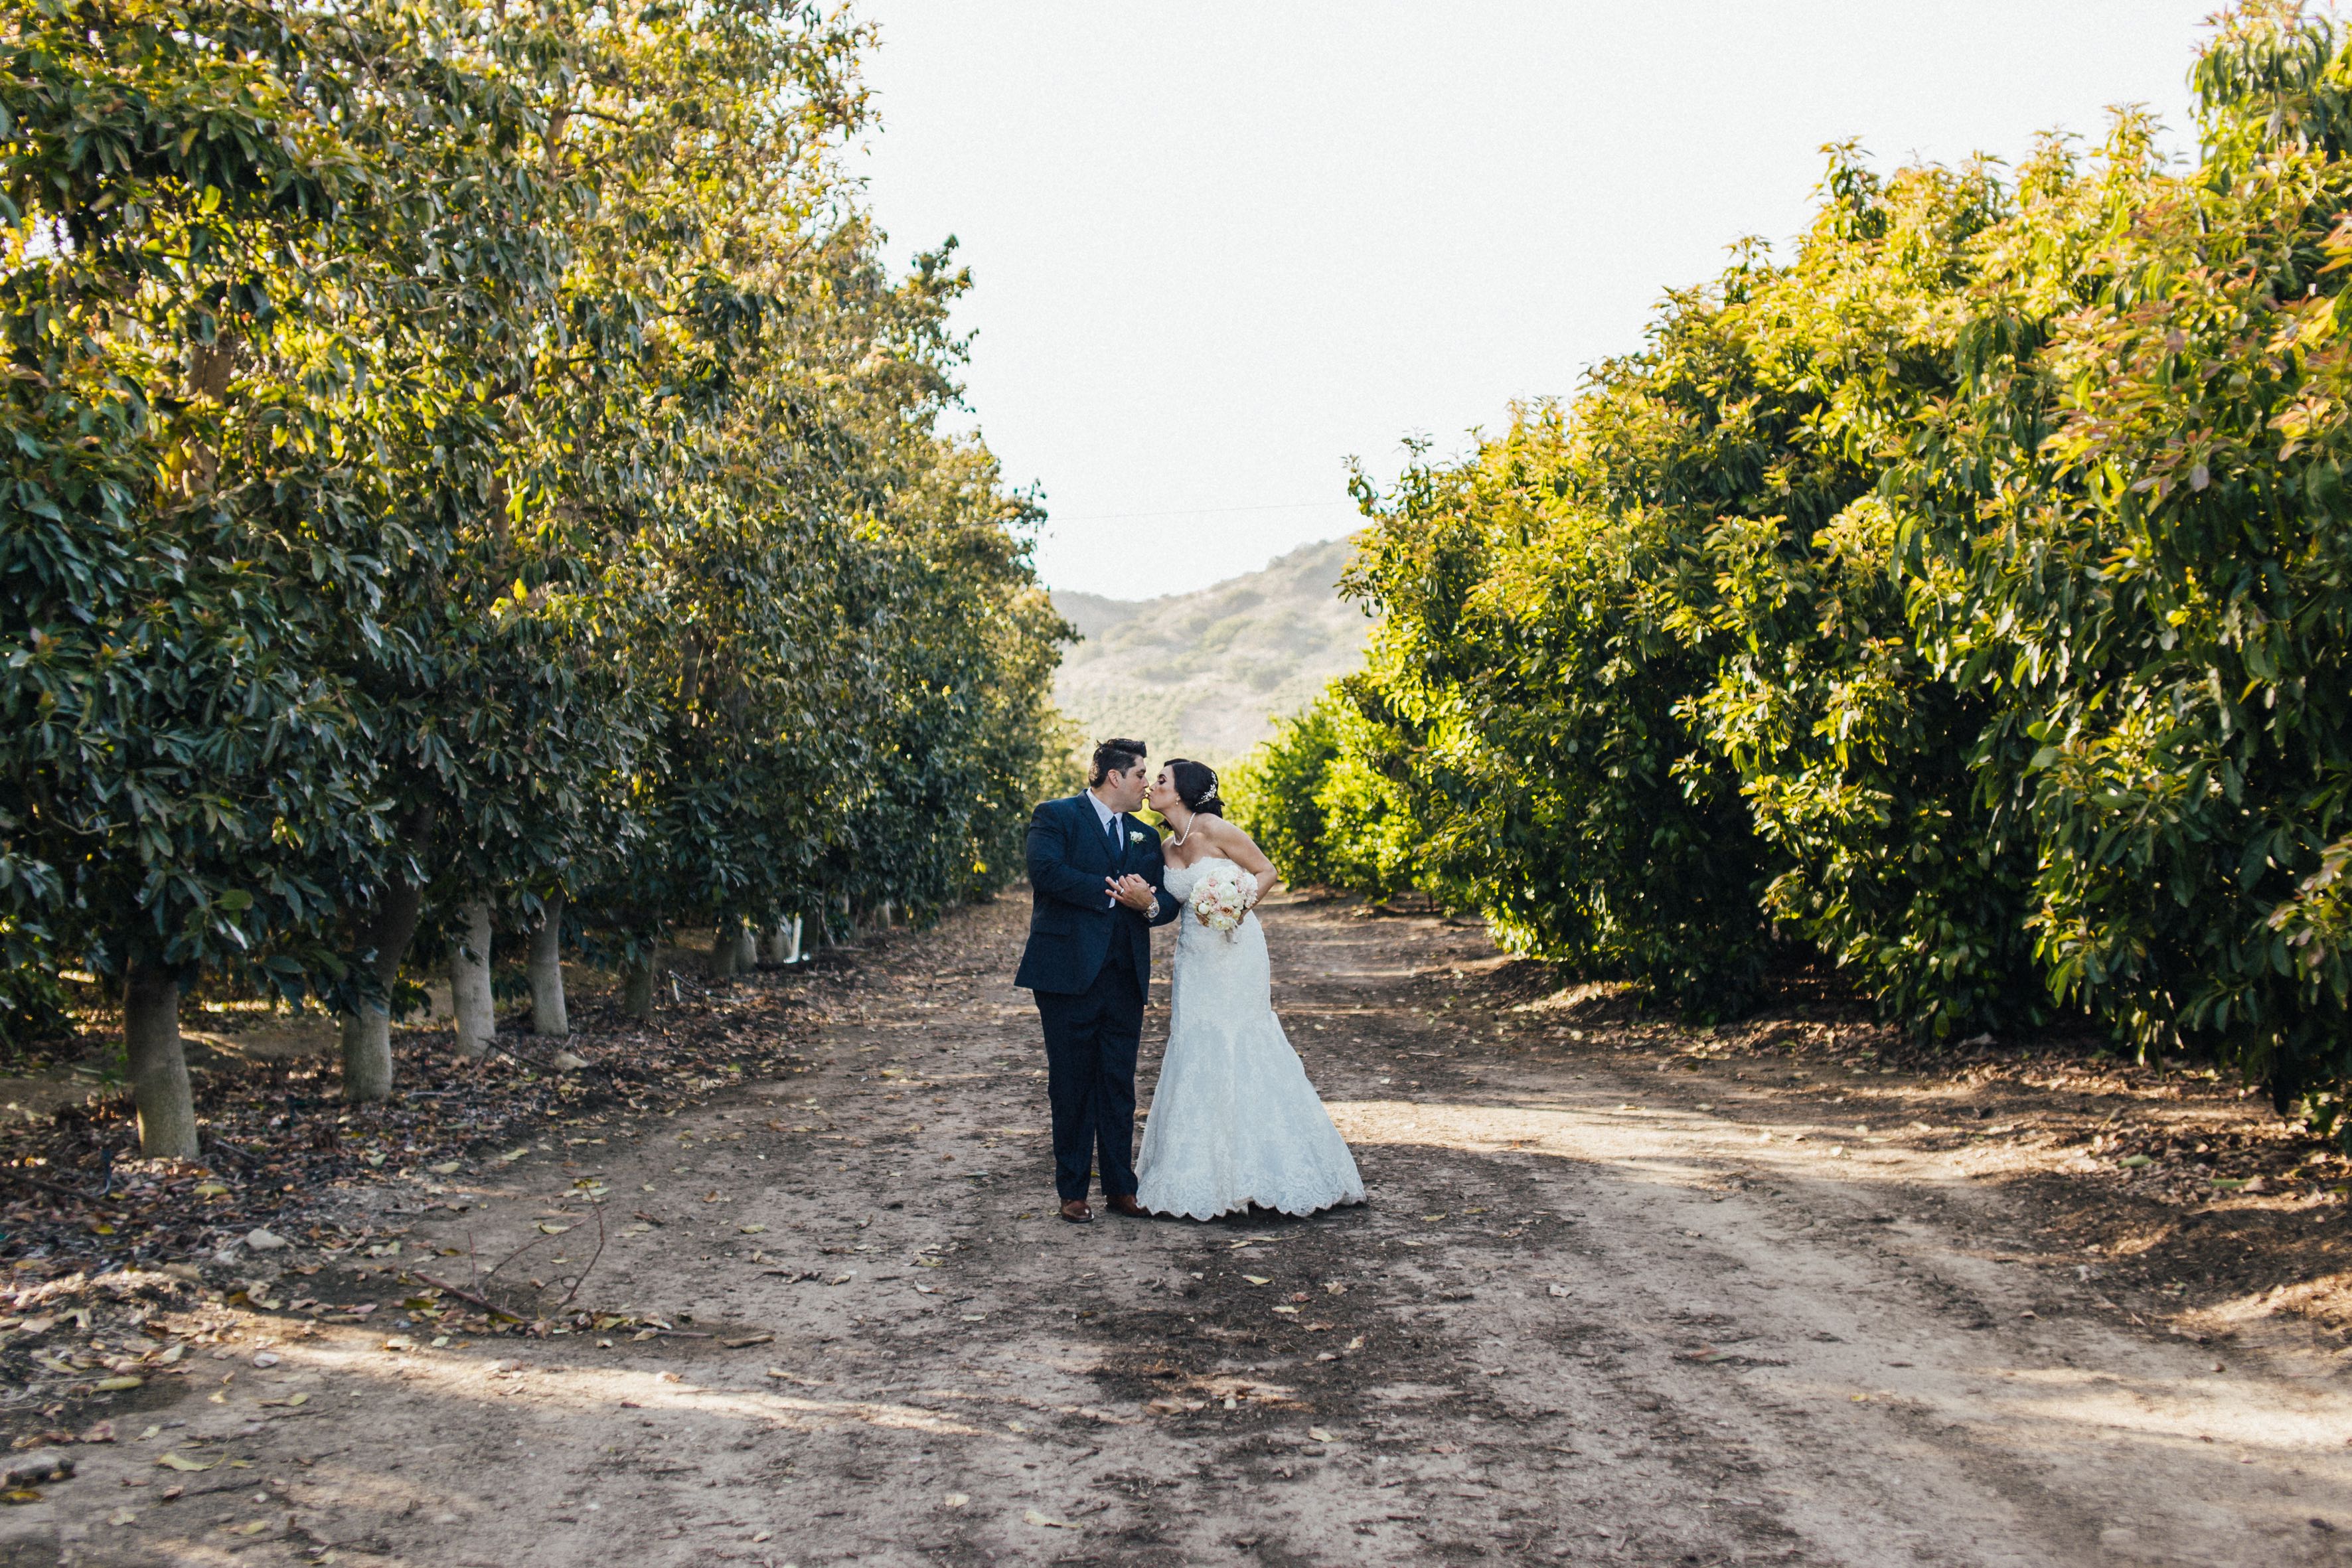 Limoneira Ranch, Cummings Road Santa Paula, CA - wedding photography in California - 1